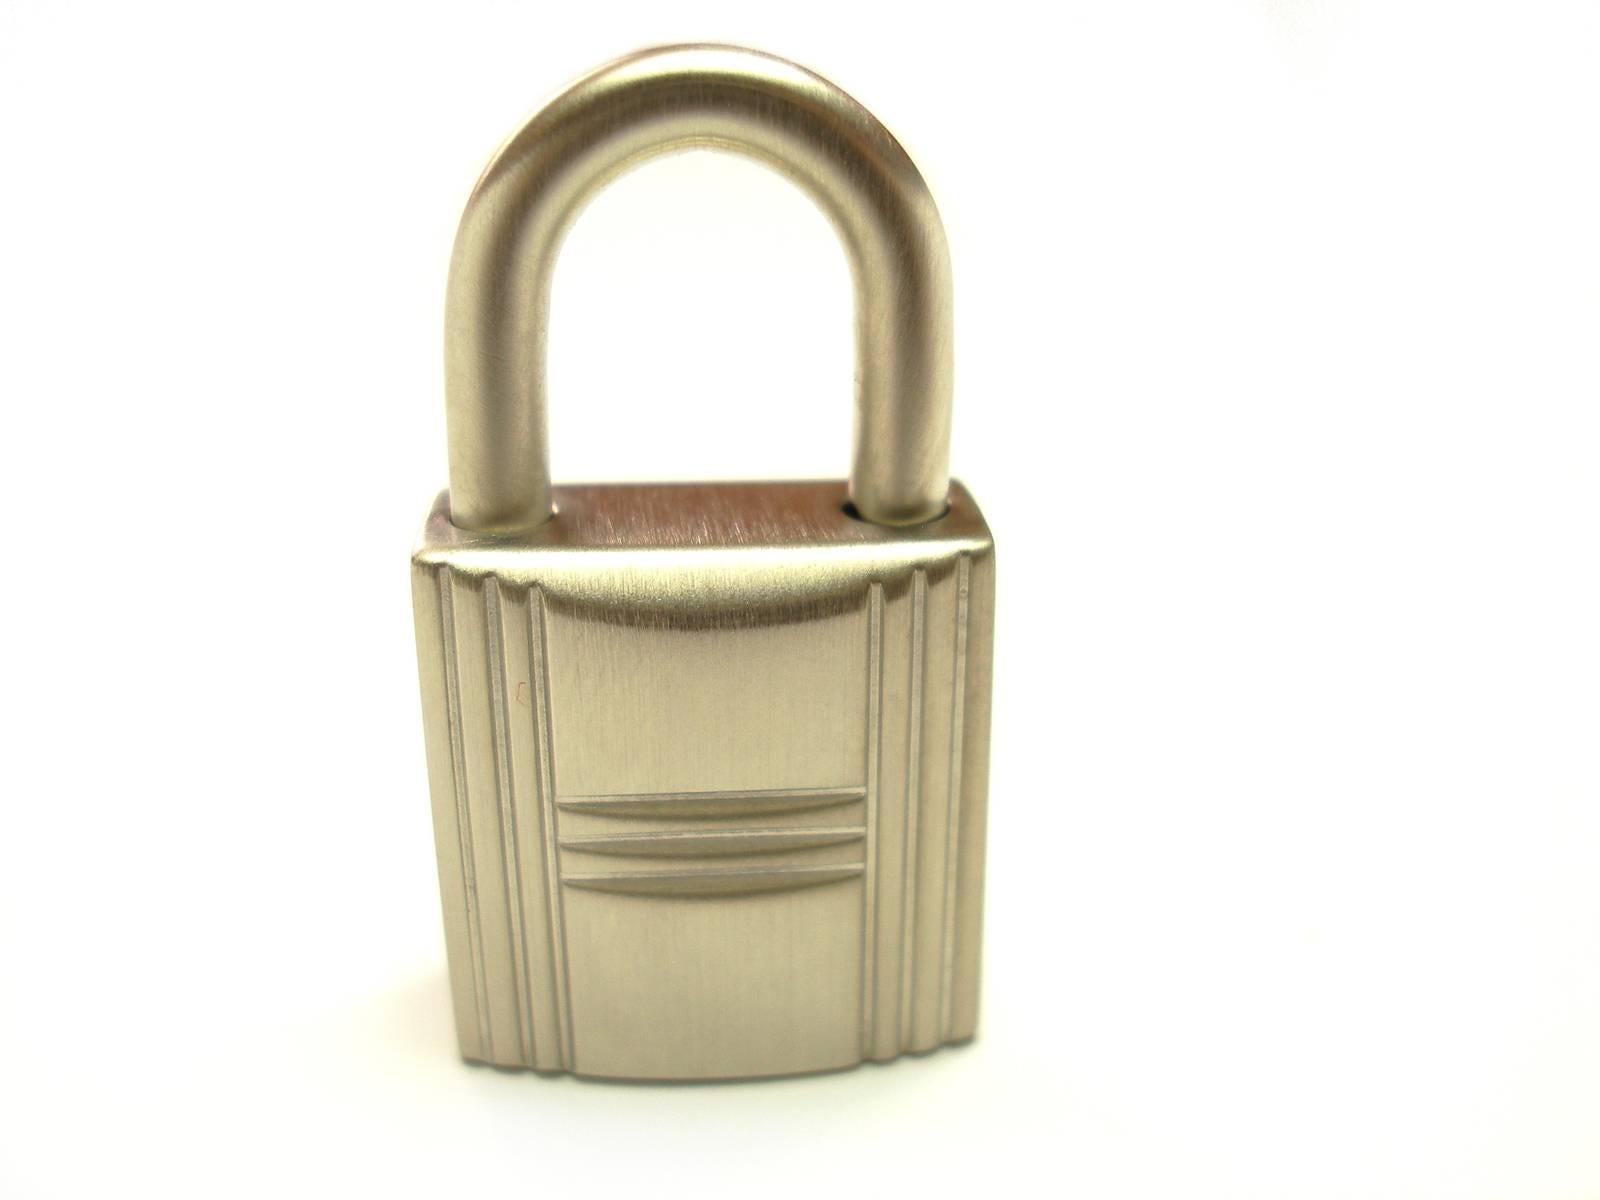 Hermès Cadenas Lock & 2 Keys For Birkin or Kelly bag Brush Finish/ BRAND NEW 5